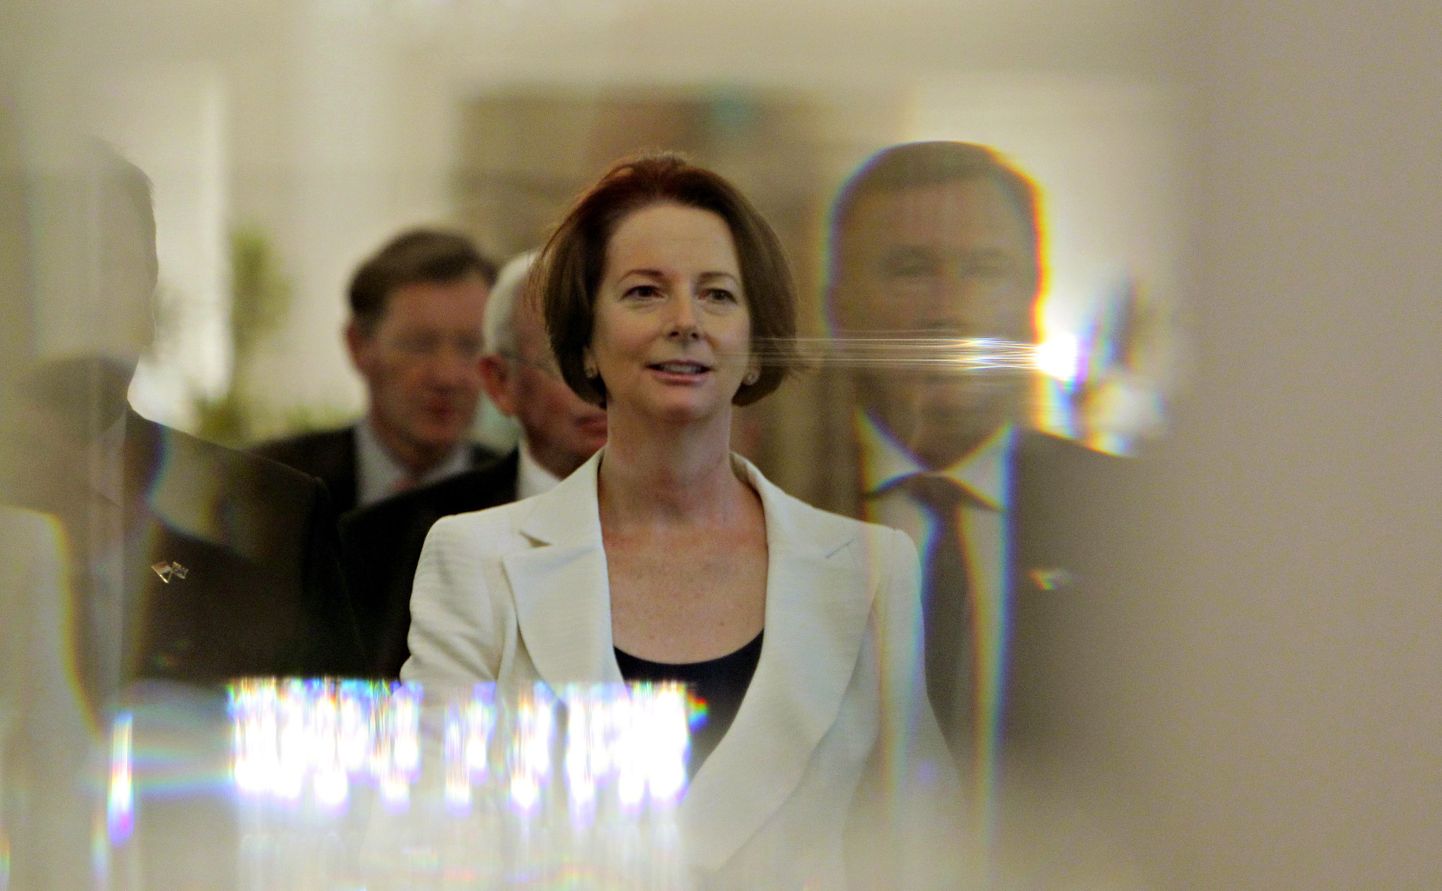 Austraalia peaminister Julia Gillard